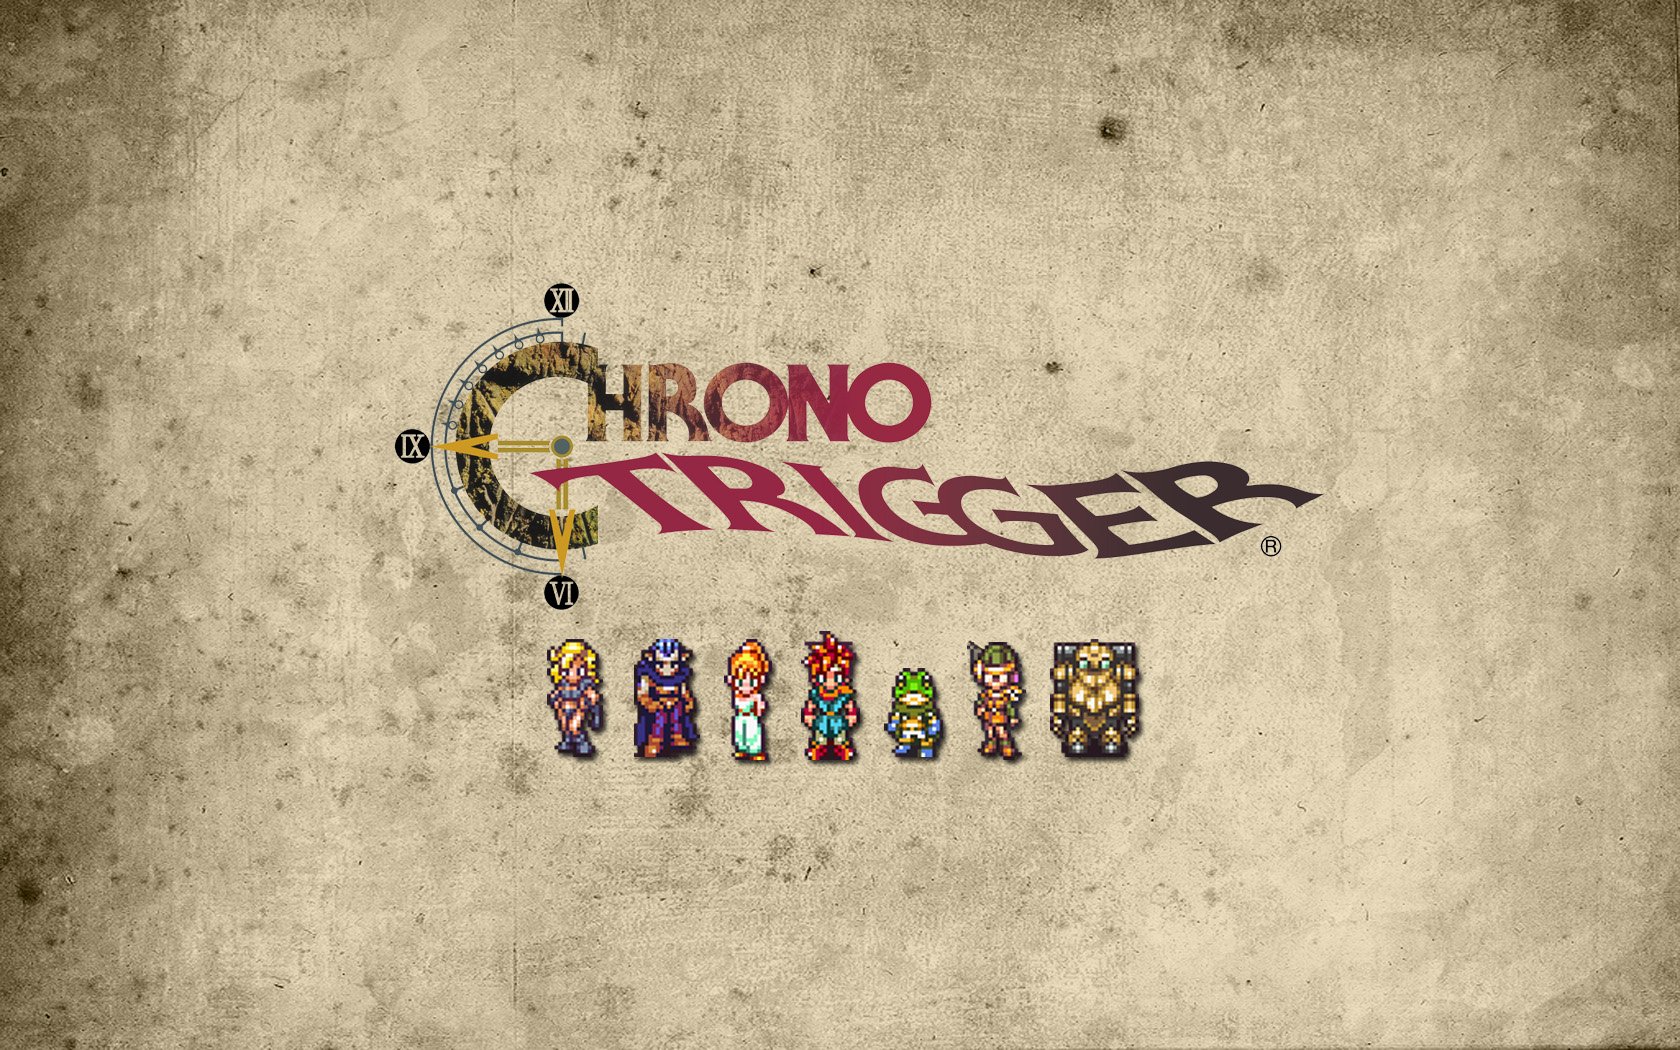 Chrono trigger wallpaper